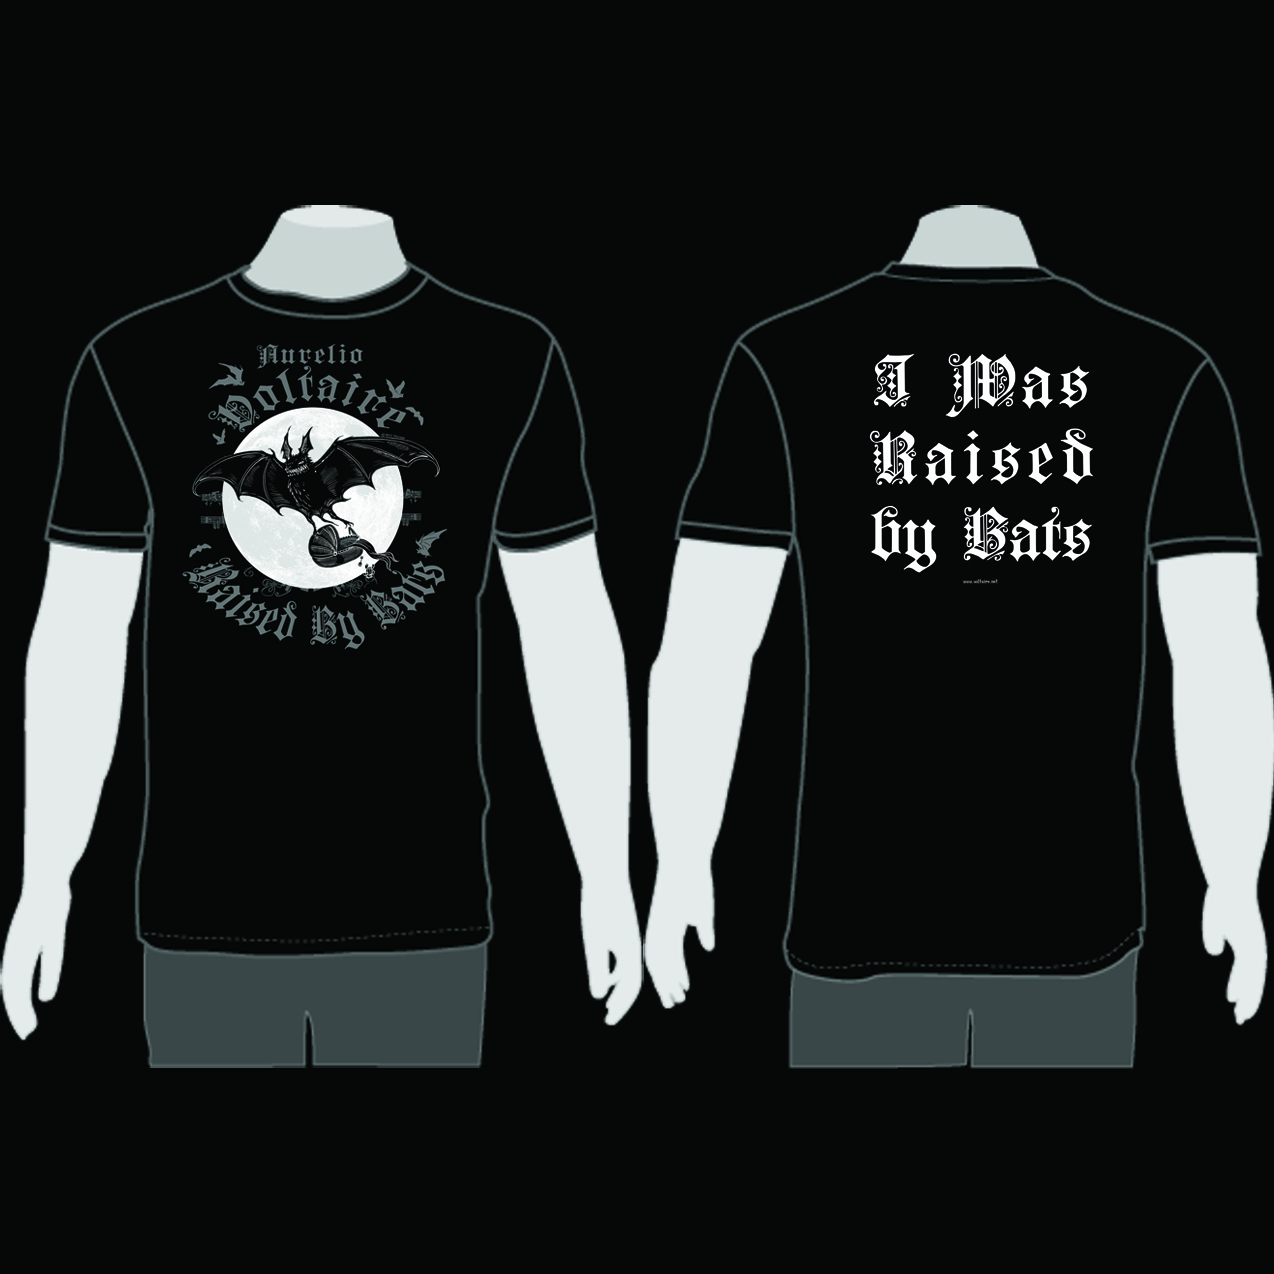 Raised By Bats Shirt - LARGE